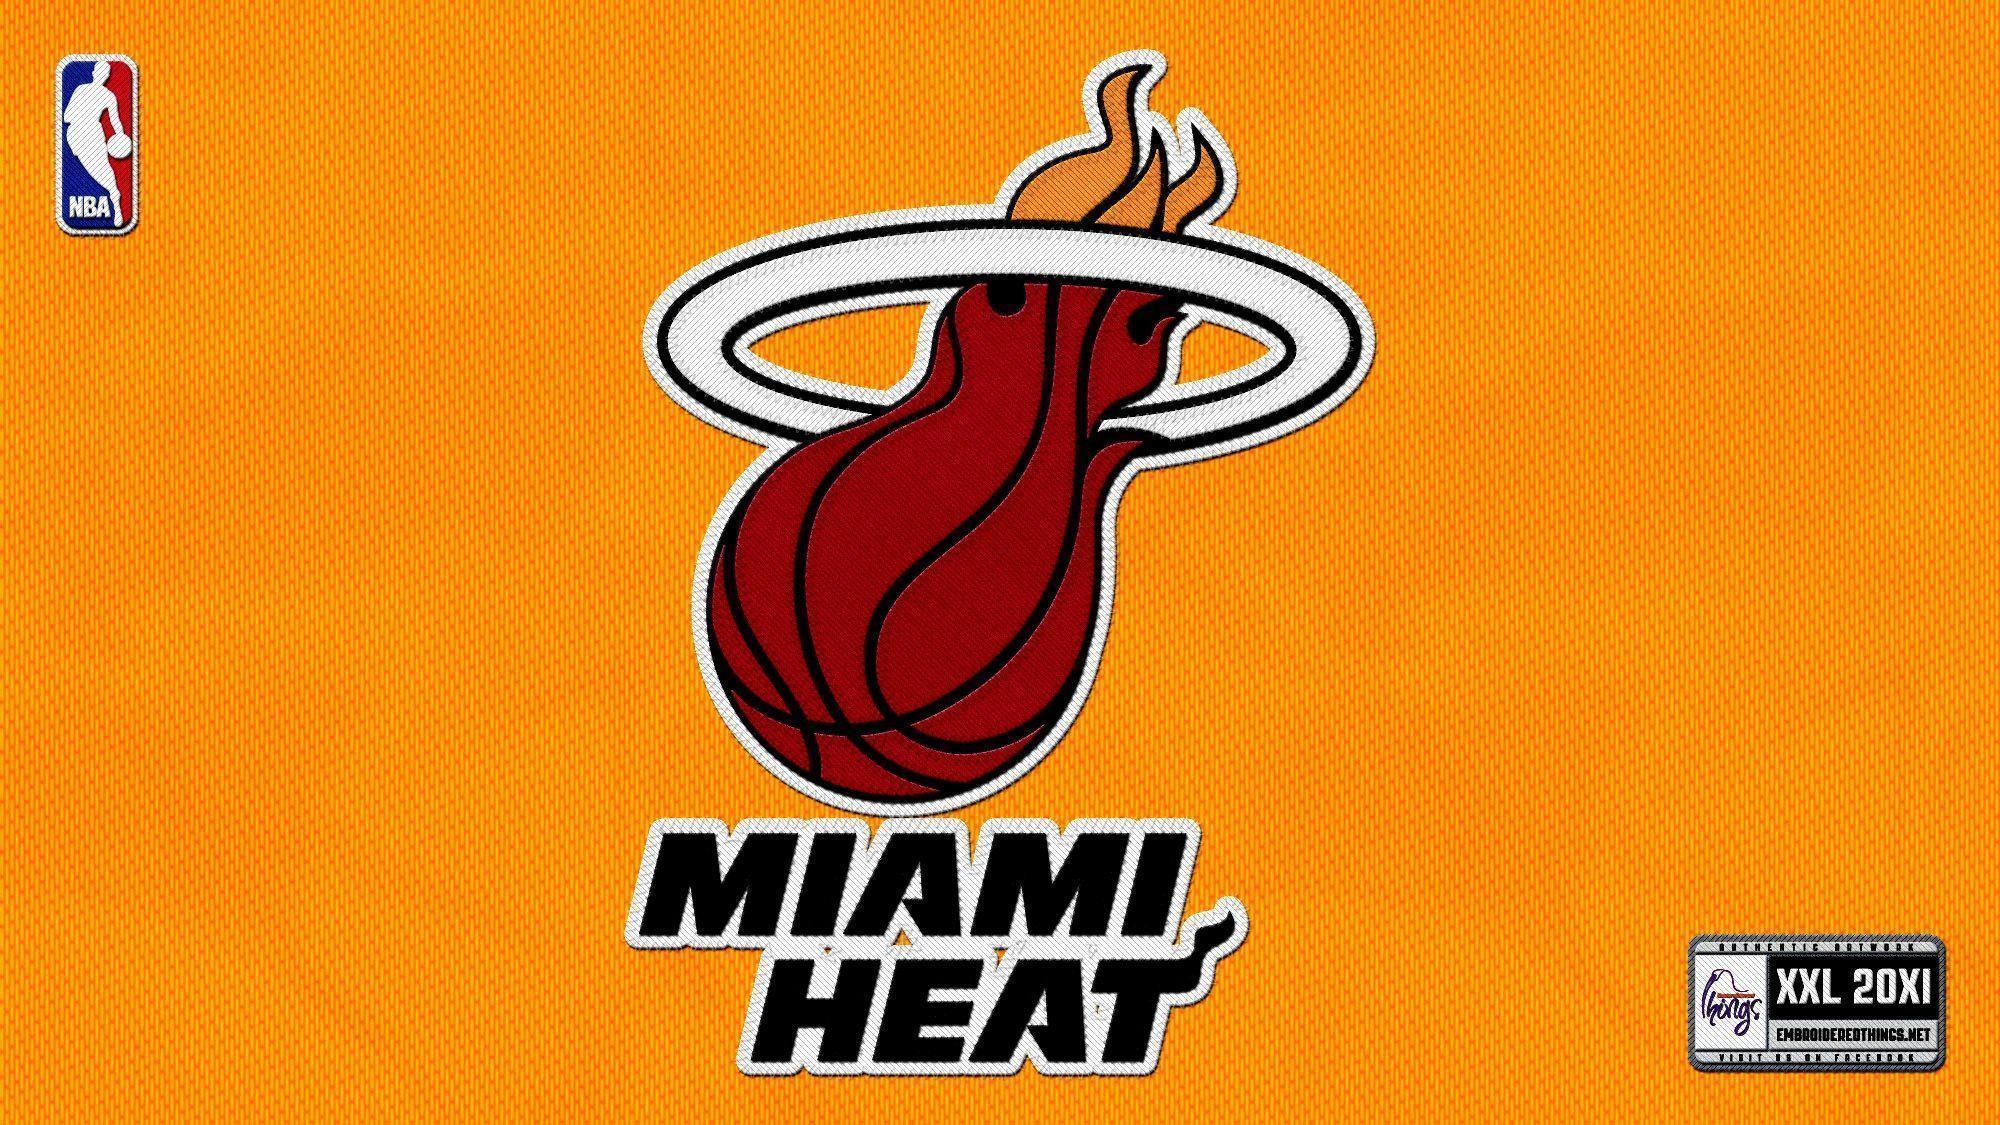 Miami Heat desktop Wallpaper. Free Download Wallpaper